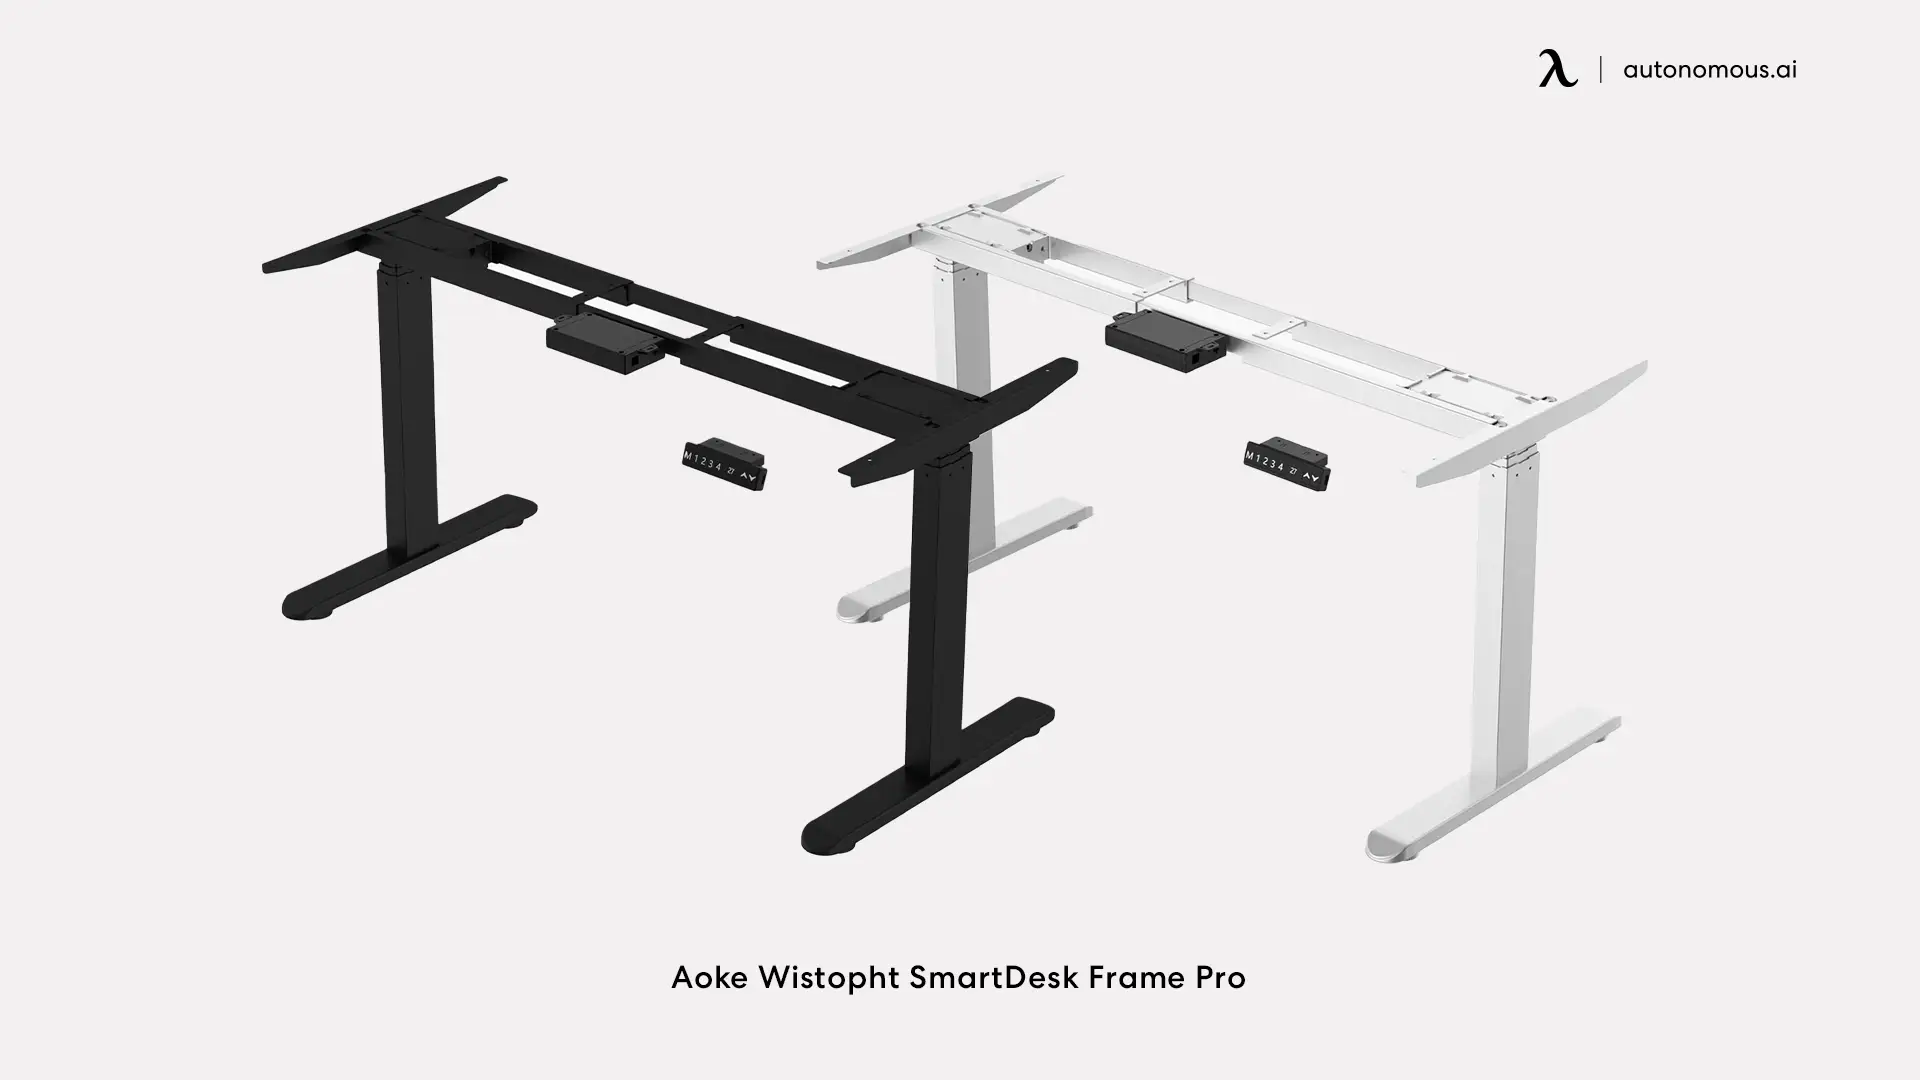 Aoke Wistopht SmartDesk Frame Pro